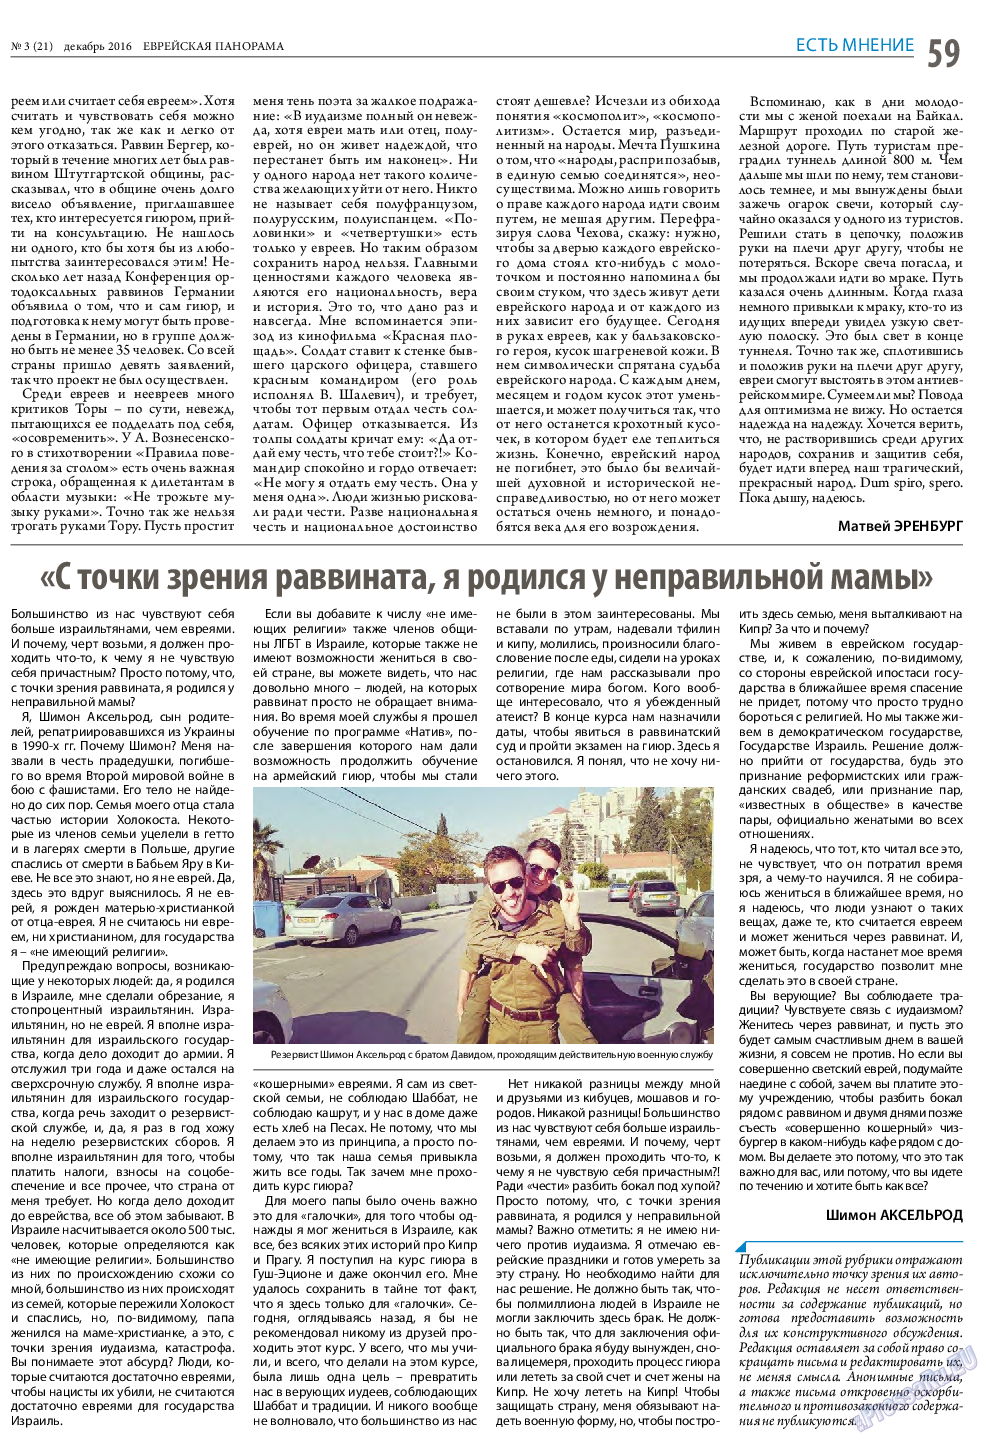 Еврейская панорама, газета. 2016 №3 стр.59